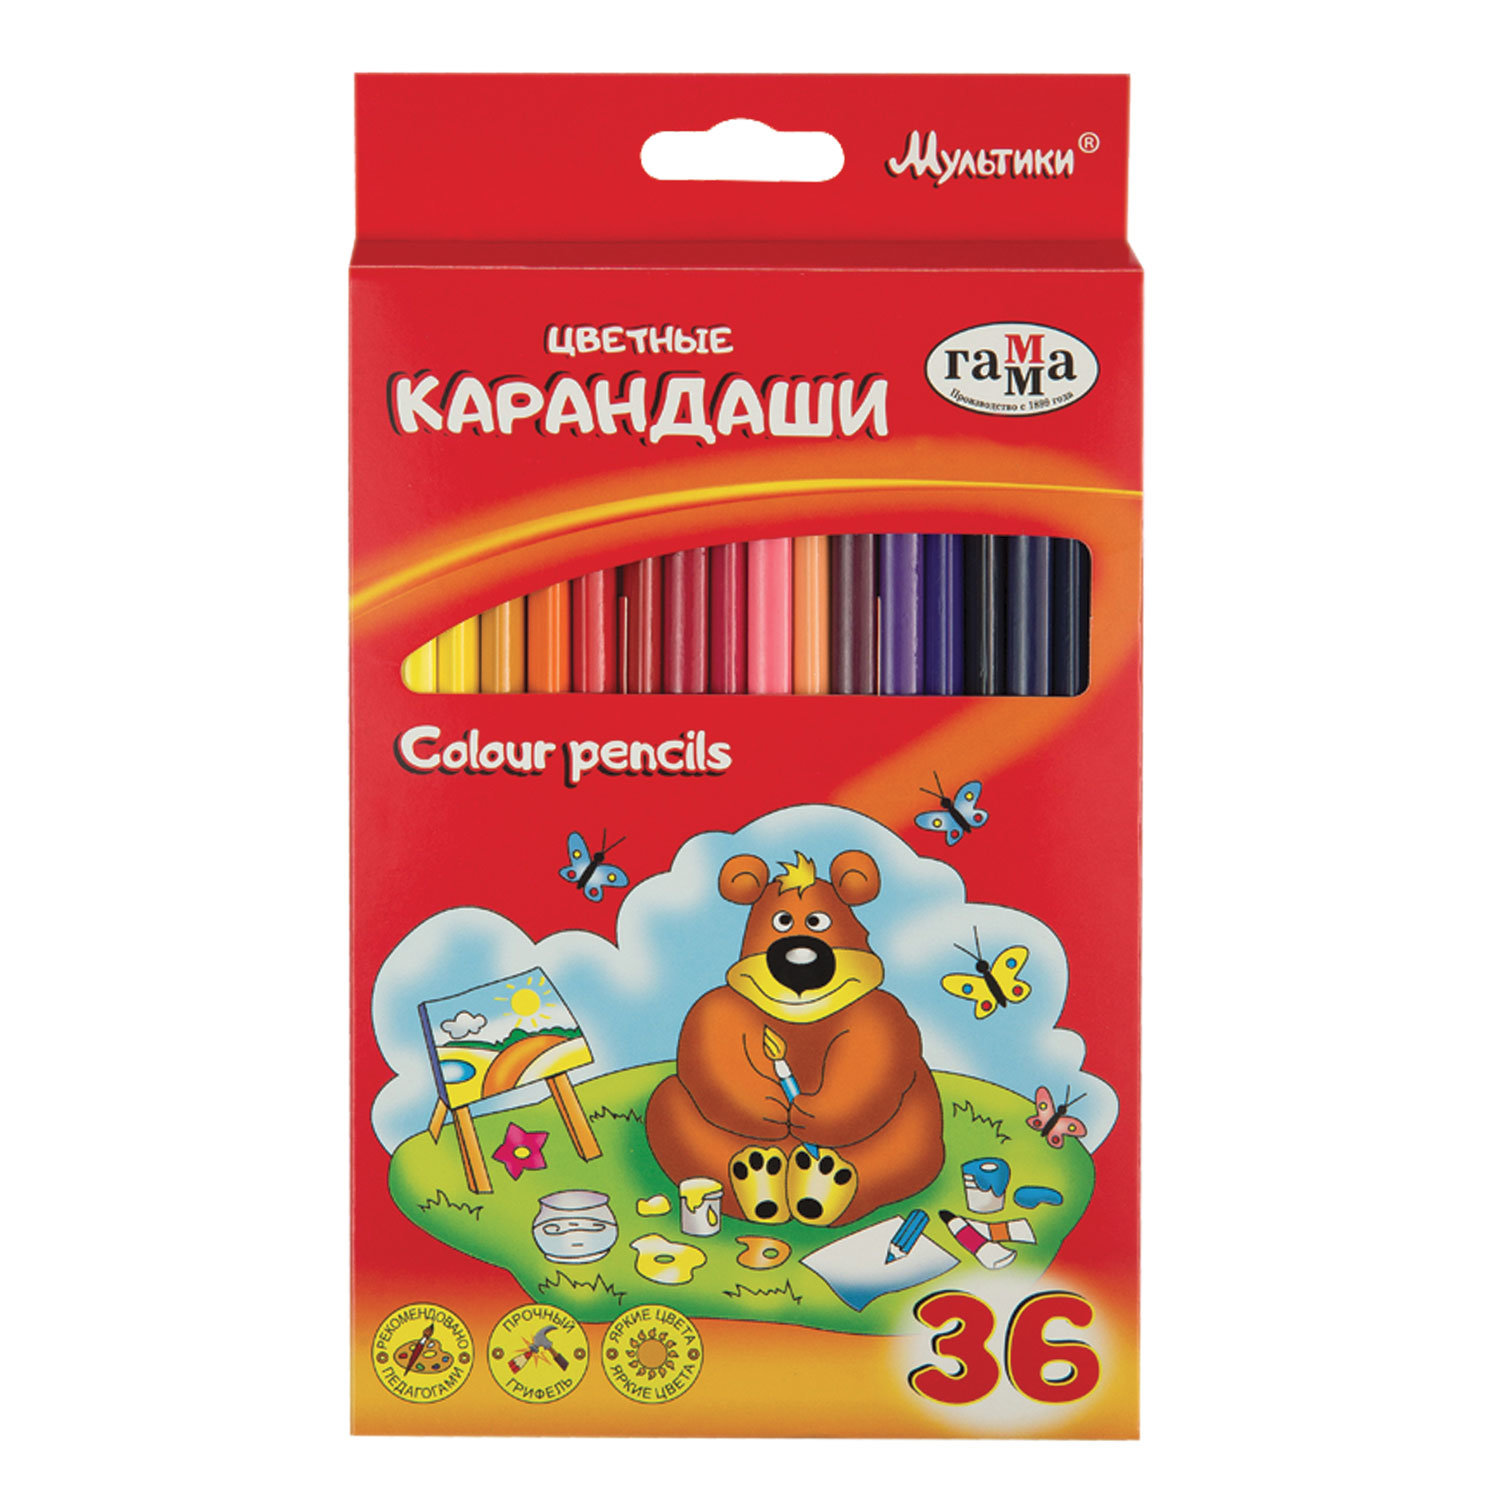 Цветные карандаши 6. Гамма карандаши трехгранные цветные 36. Цветные карандаши трёхгранные 36 цветов. Карандаши цветные 36 цветов гамма. Carioca набор цветных карандашей 36 цветов.